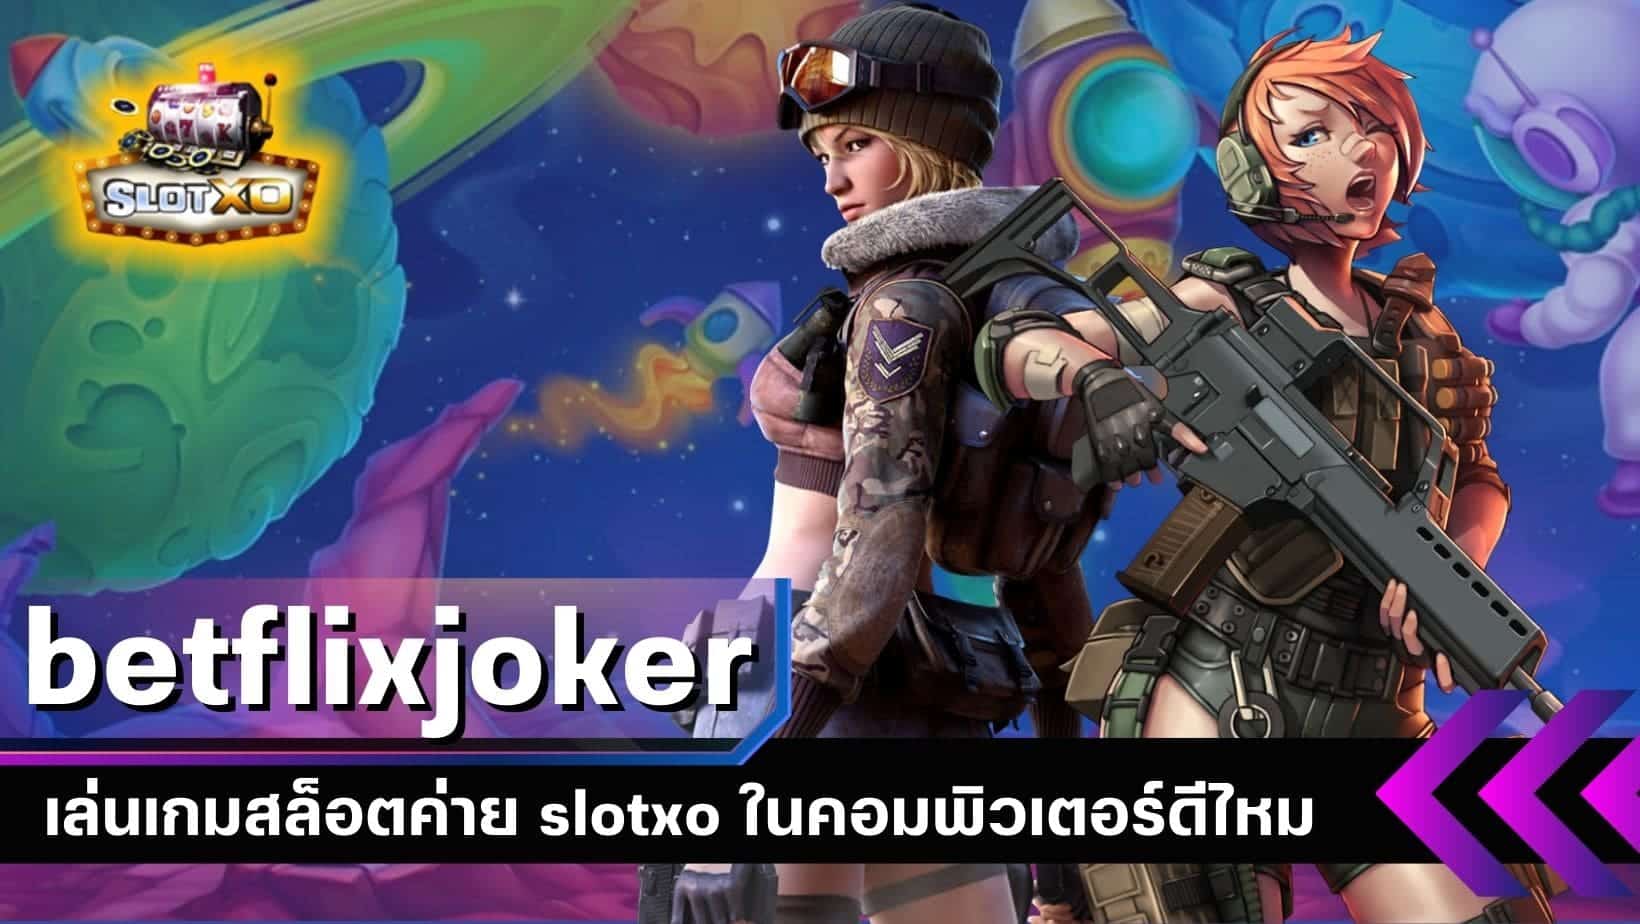 betflixjoker เล่นเกมสล็อตค่าย slotxo ในคอมพิวเตอร์ดีไหม 2022